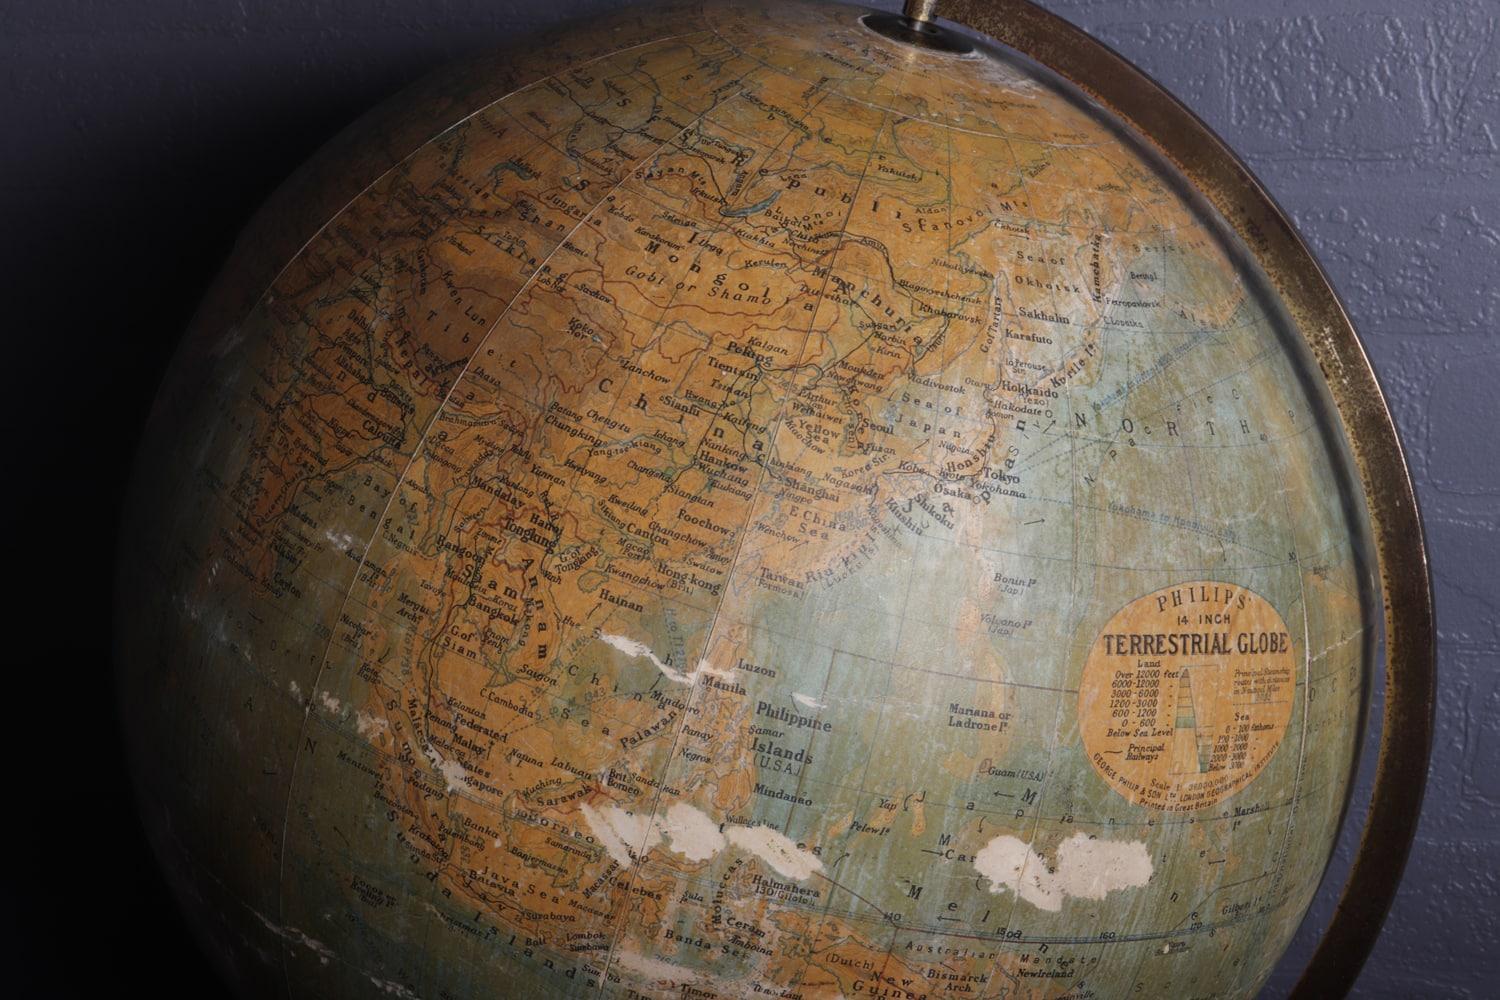 Philips Terrestrial Globe, c1920 3